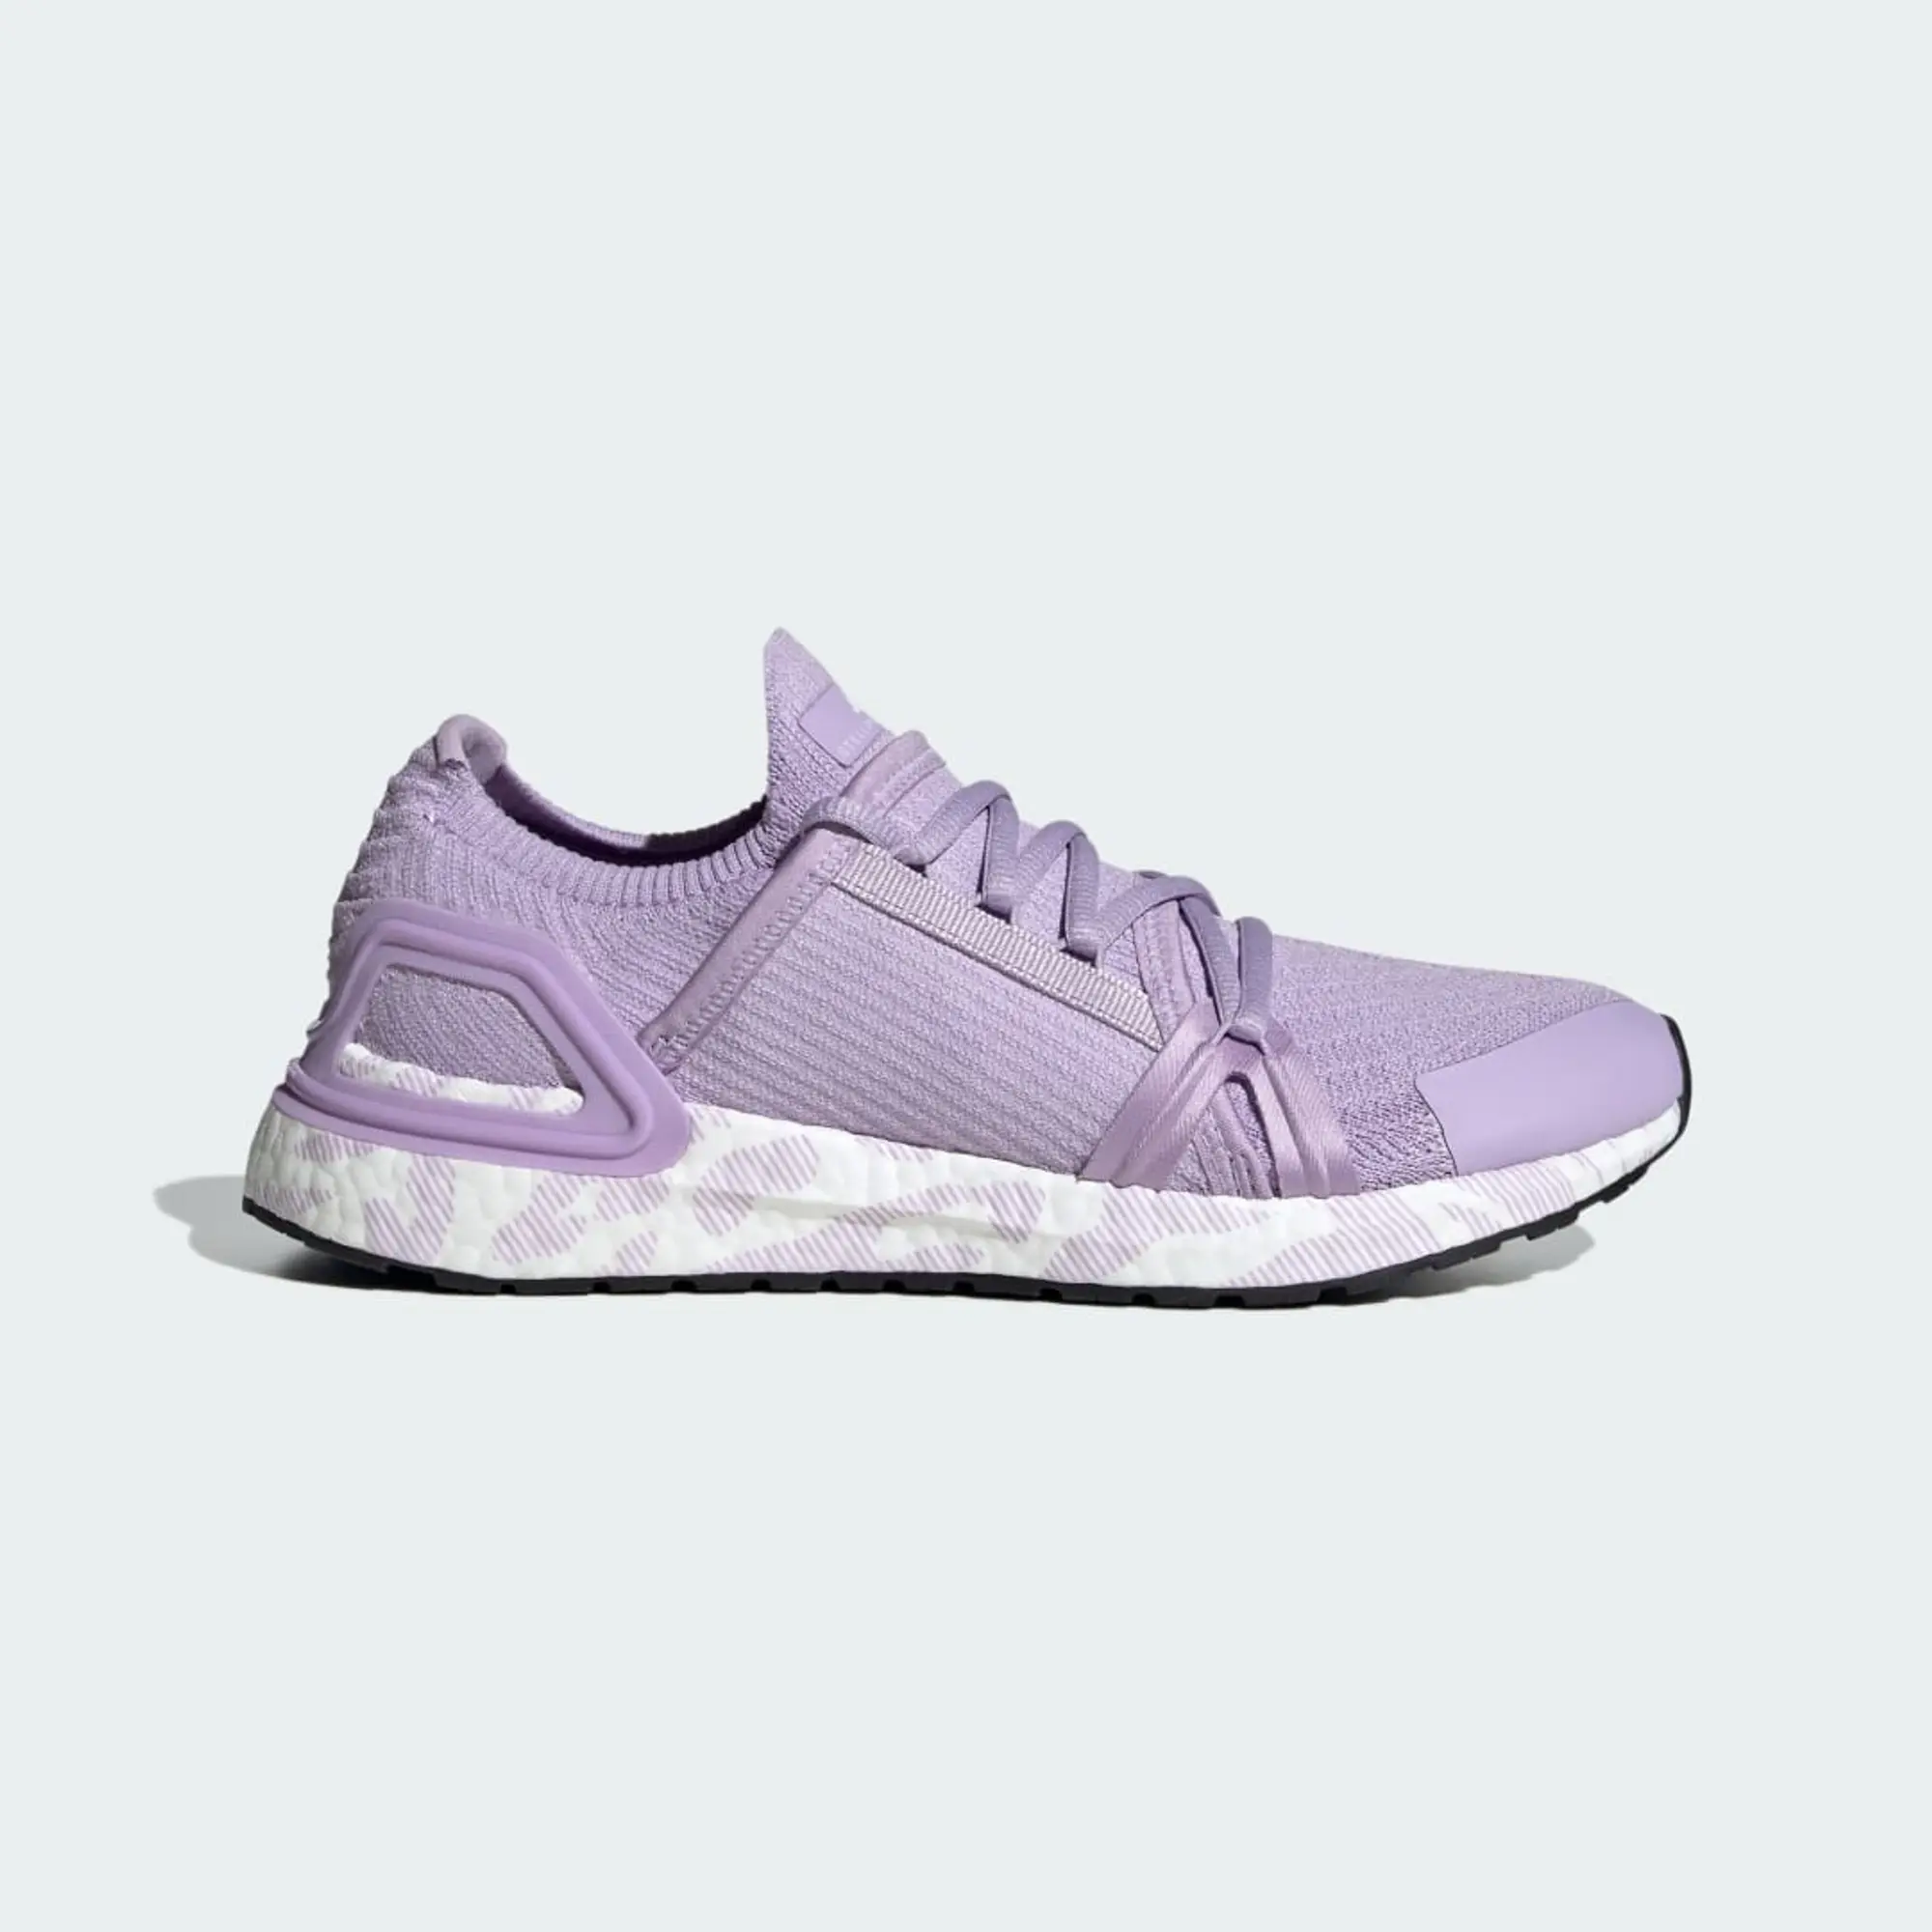 adidas by Stella McCartney Ultraboost 20 Shoes - Purple Glow / Cloud White / Core Black